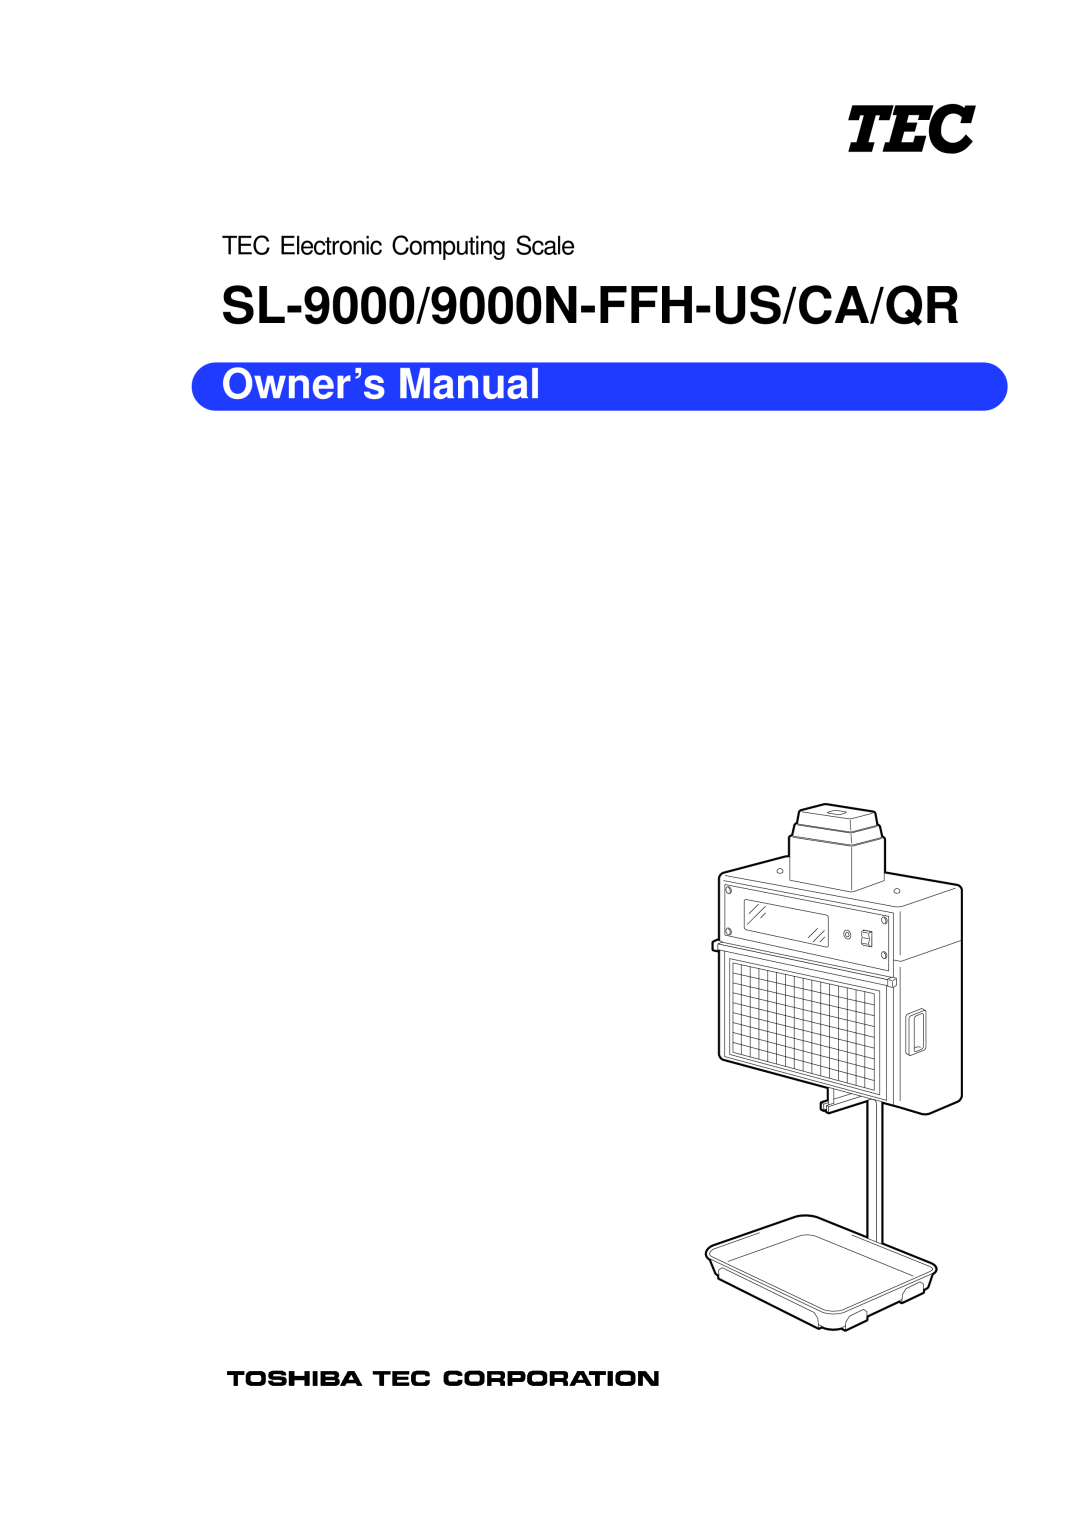 Toshiba SL-9000N-FFH-US, EM1-31076 owner manual SL-9000/9000N-FFH-US/CA/QR, Owner’s Manual, TEC Electronic Computing Scale 